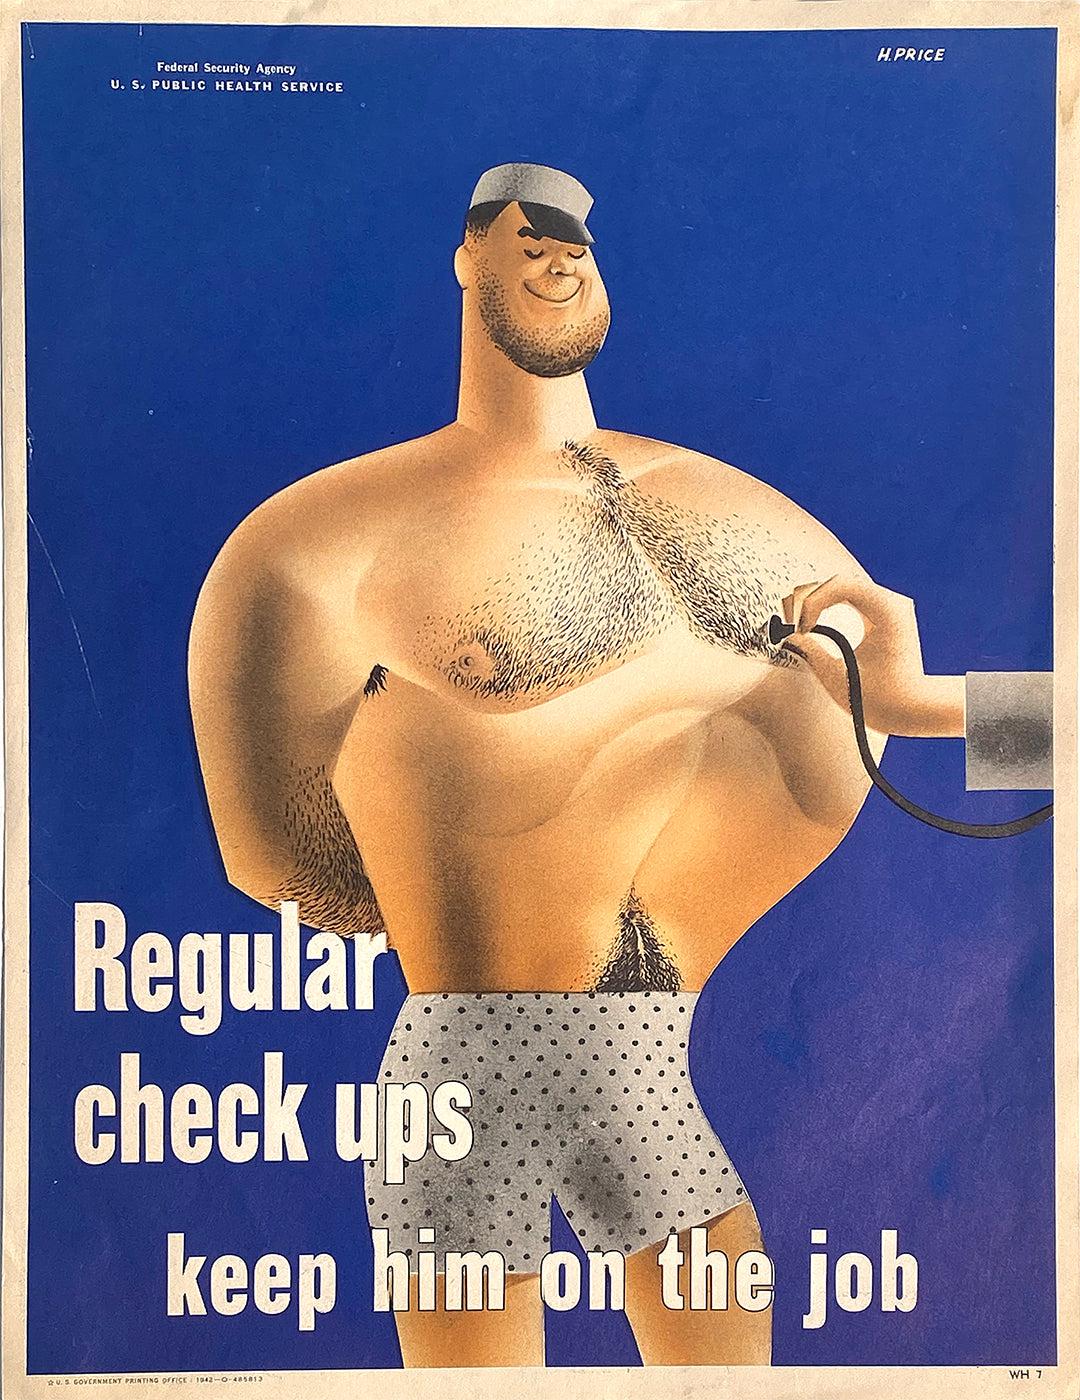 Original Vintage WWII Poster Regular Checkups Keep Him on the Job by Price